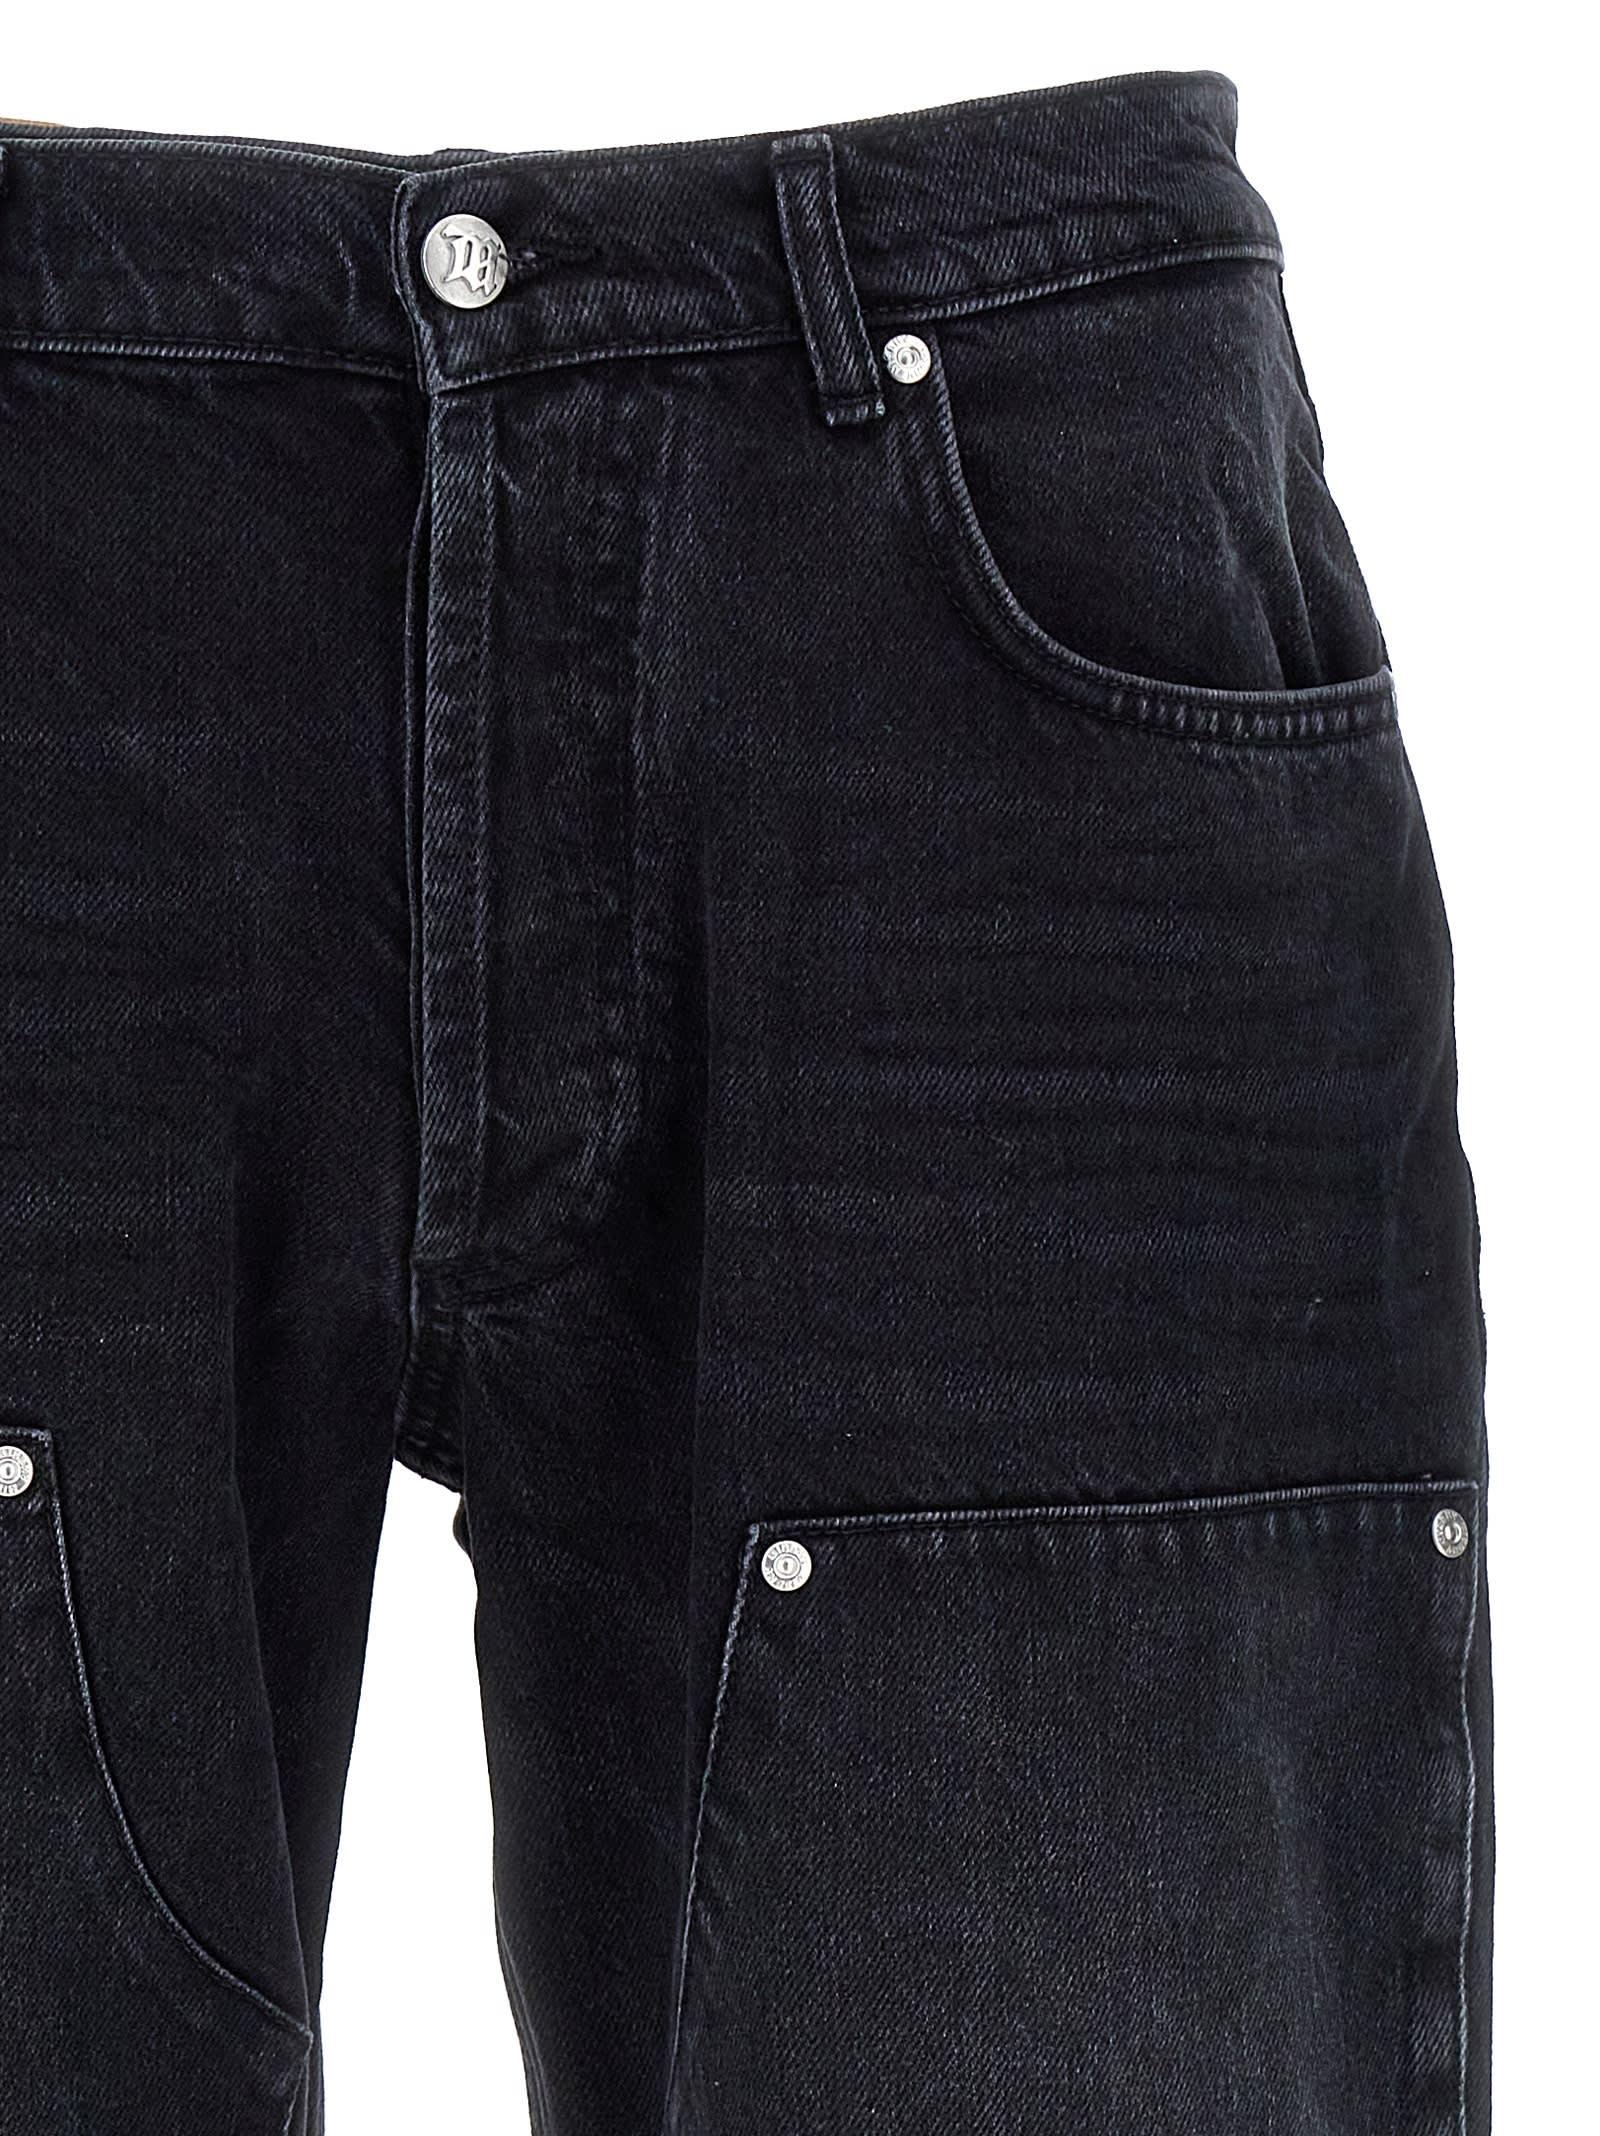 MISBHV Denim Monogram Carpenter Trousers Men Jeans Black in Size:M